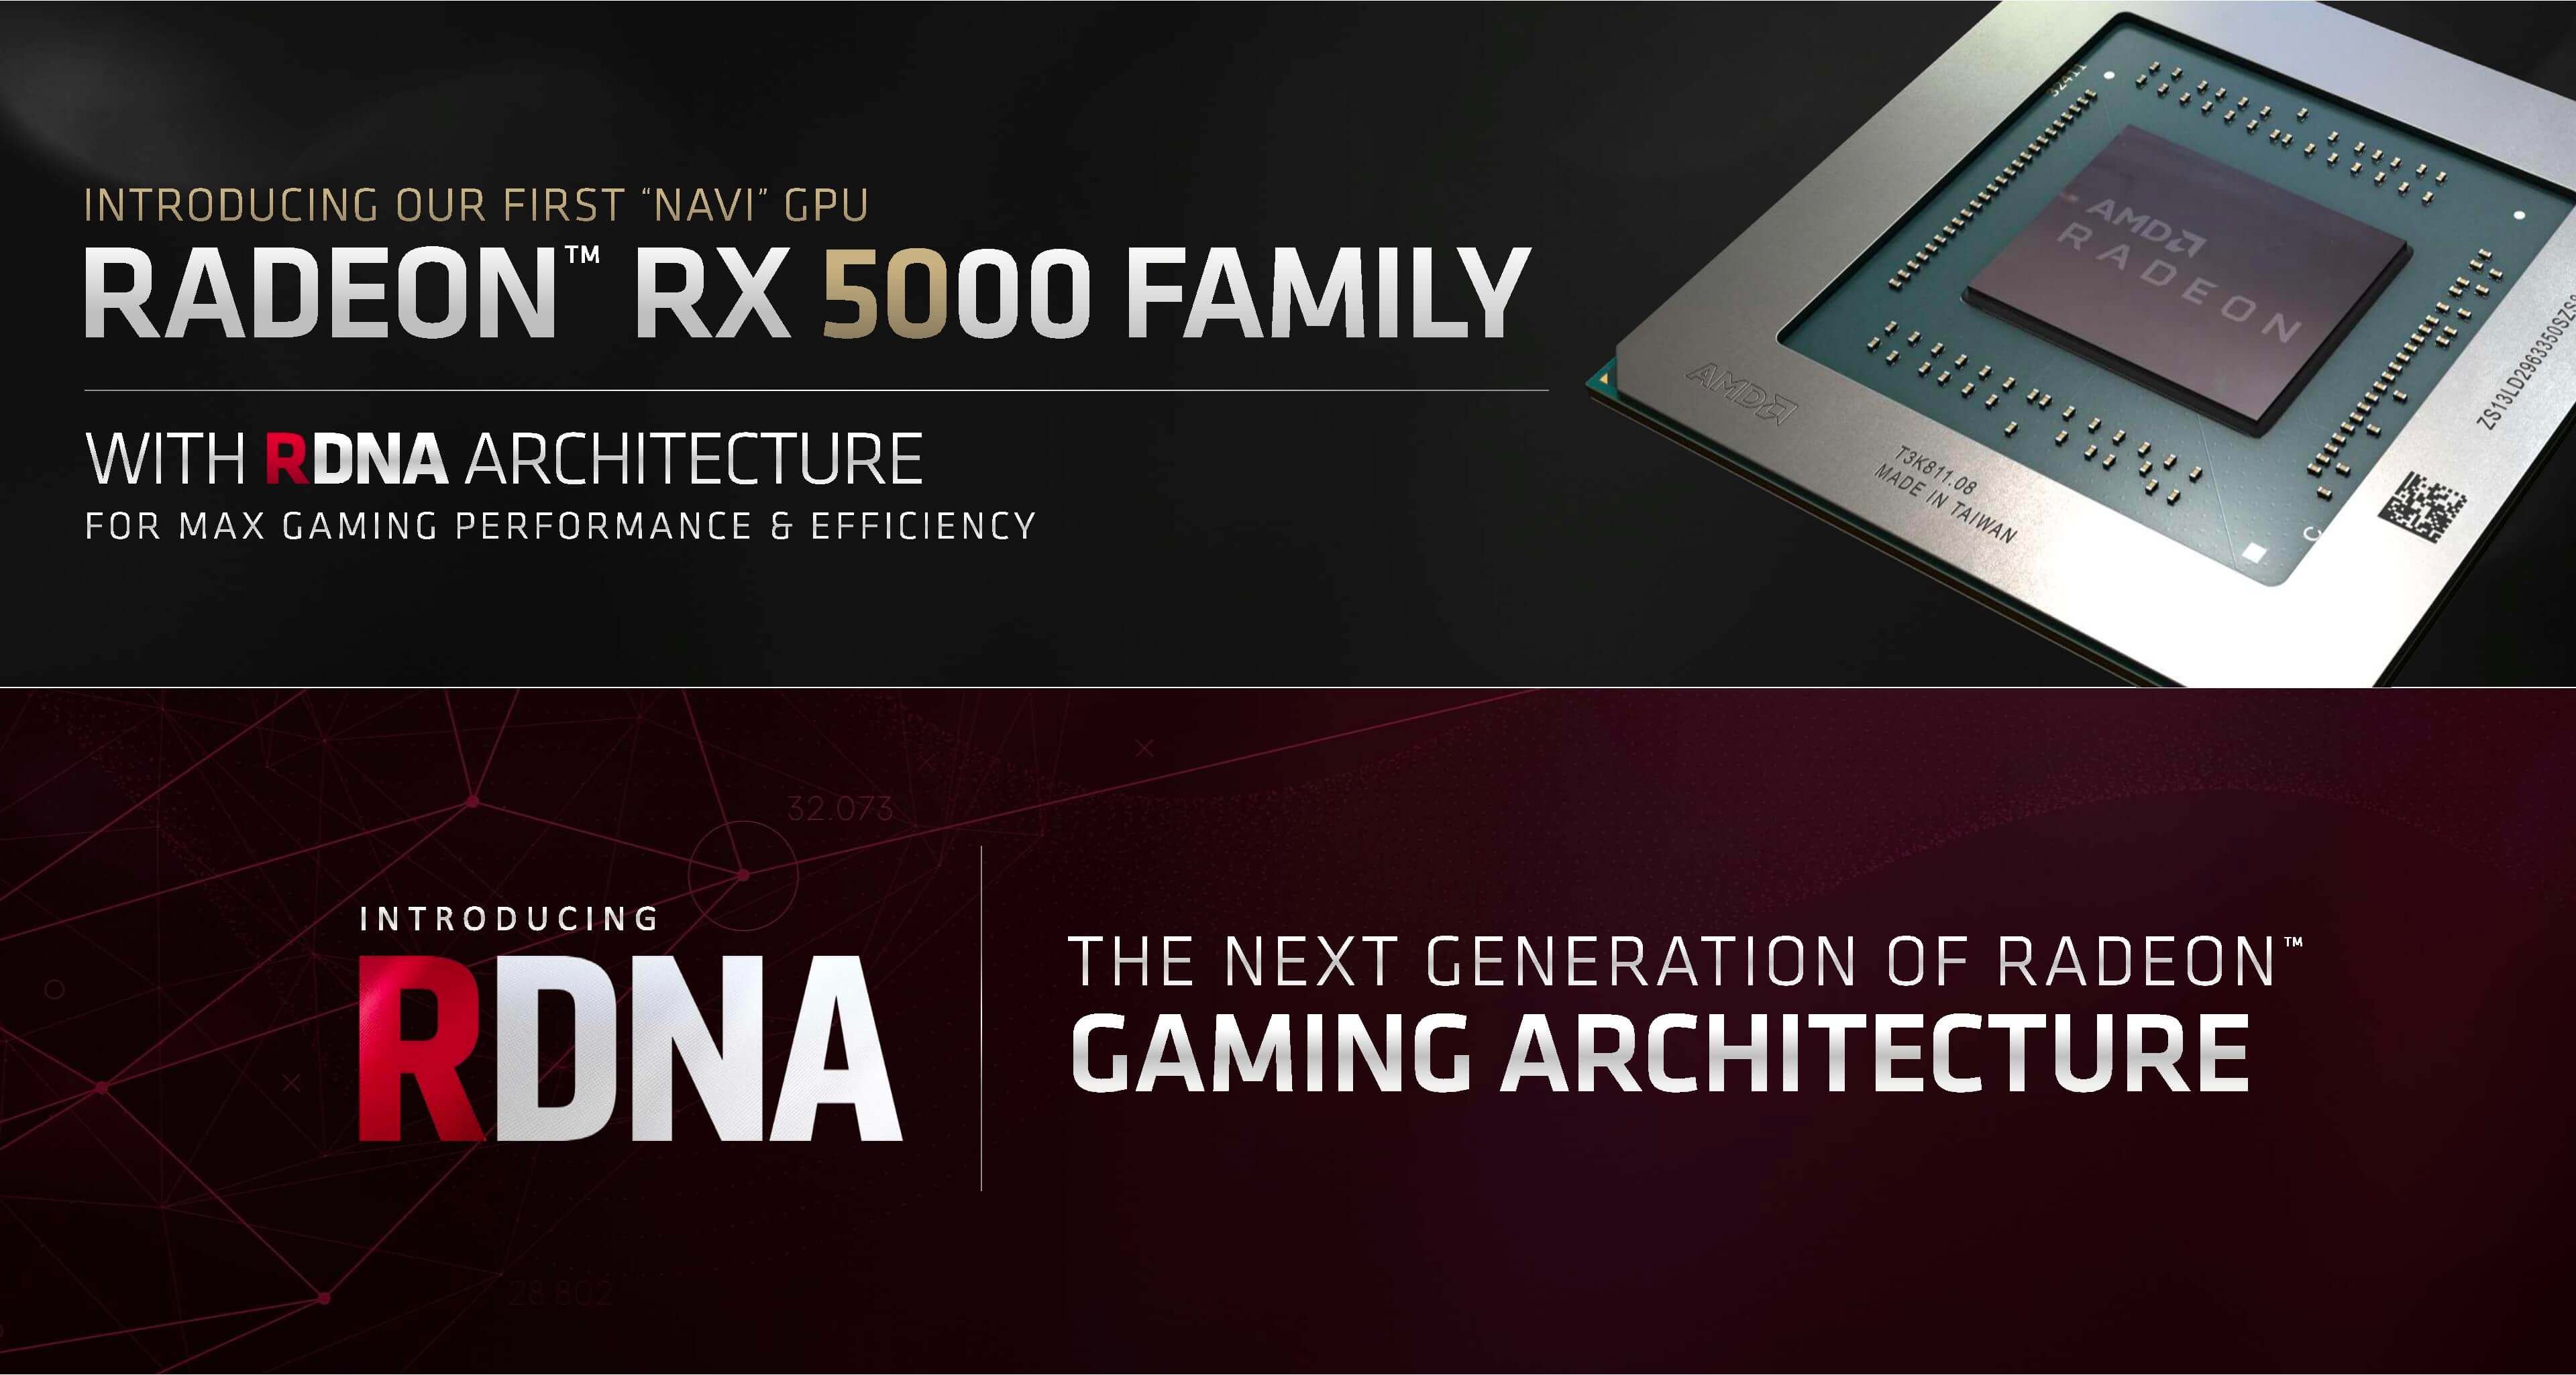 AMD's Navi GPU debuts in July with the Radeon RX 5700 series